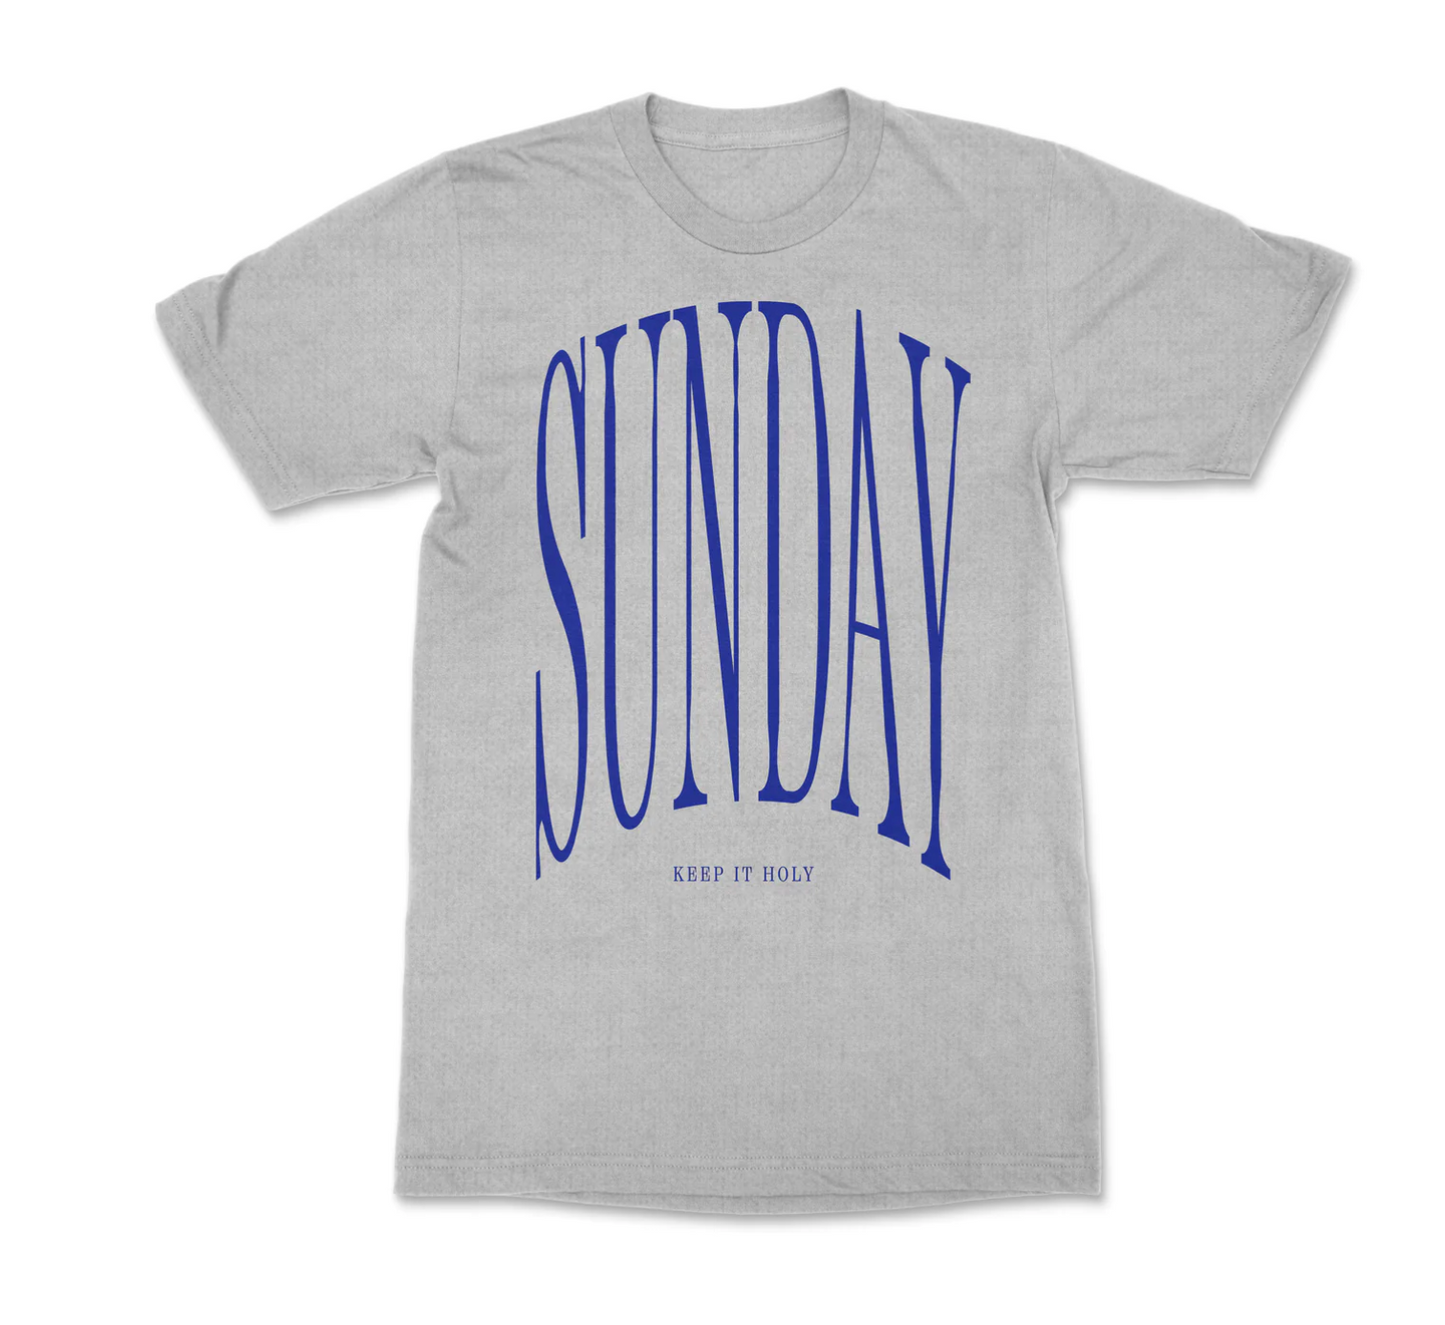 (CLEARANCE) SUNDAY (Keep it Holy) Adult T Shirt